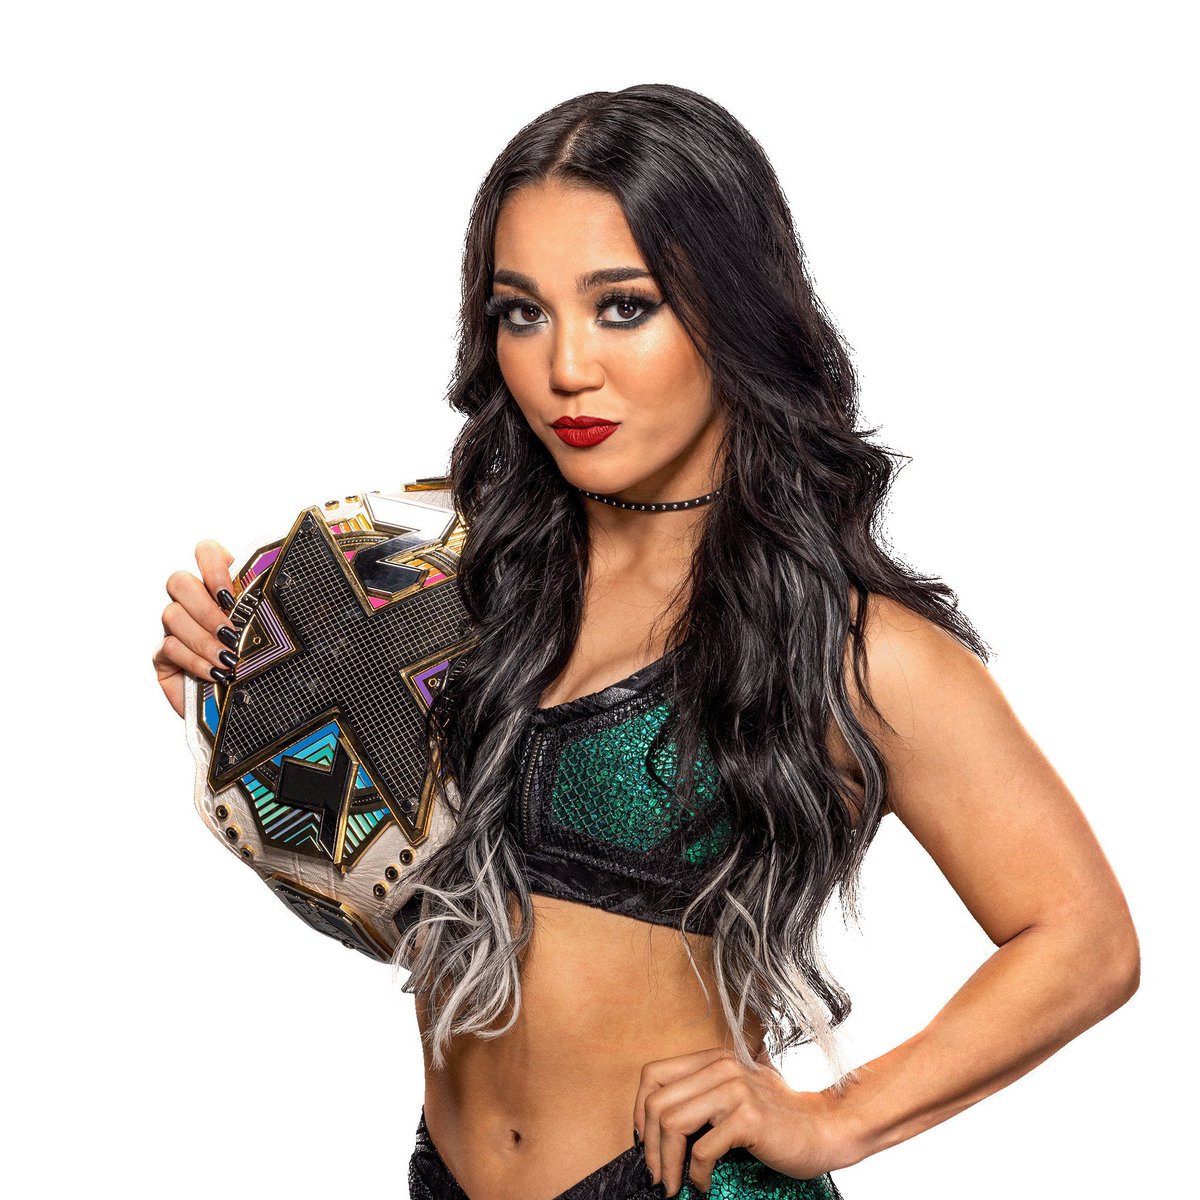 Roxanne's New WWE Render is added: roxannepereznet.sosugary.com/Photos/thumbna…
#RoxannePerez #TheProdigy #WWE #WWENXT

(@roxanne_wwe)